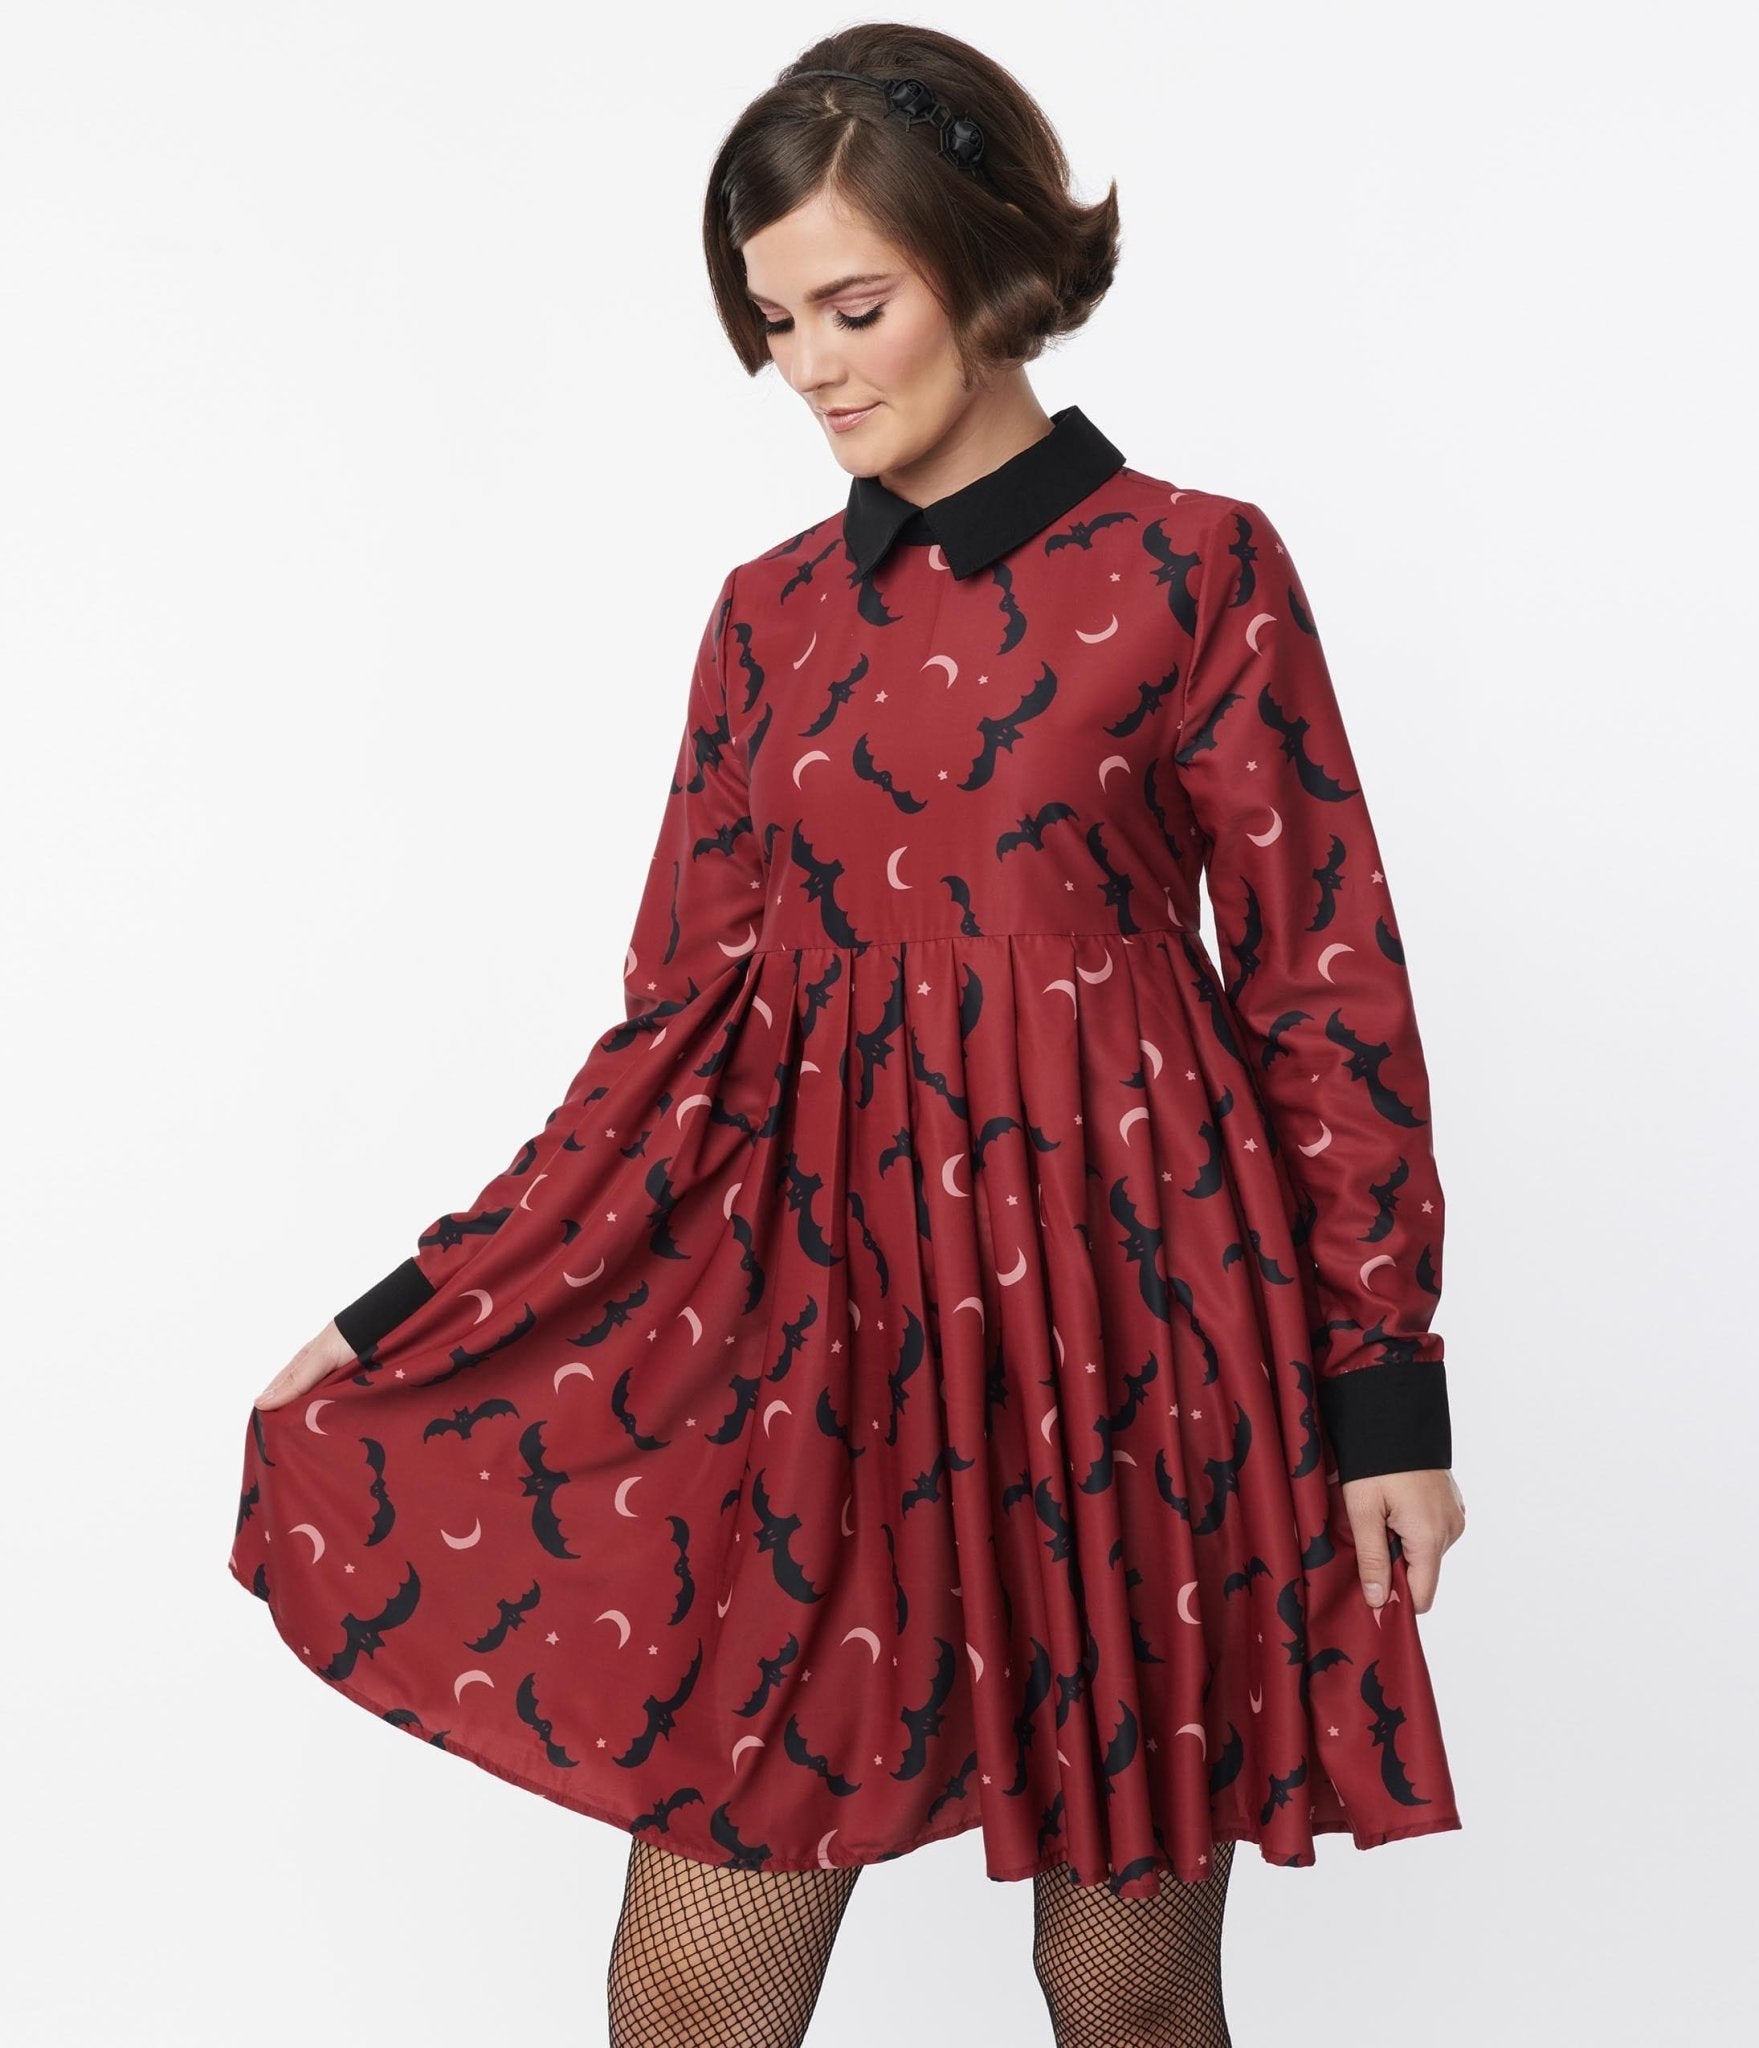  Black Cemetery Red Bat Print Women Halloween Dress